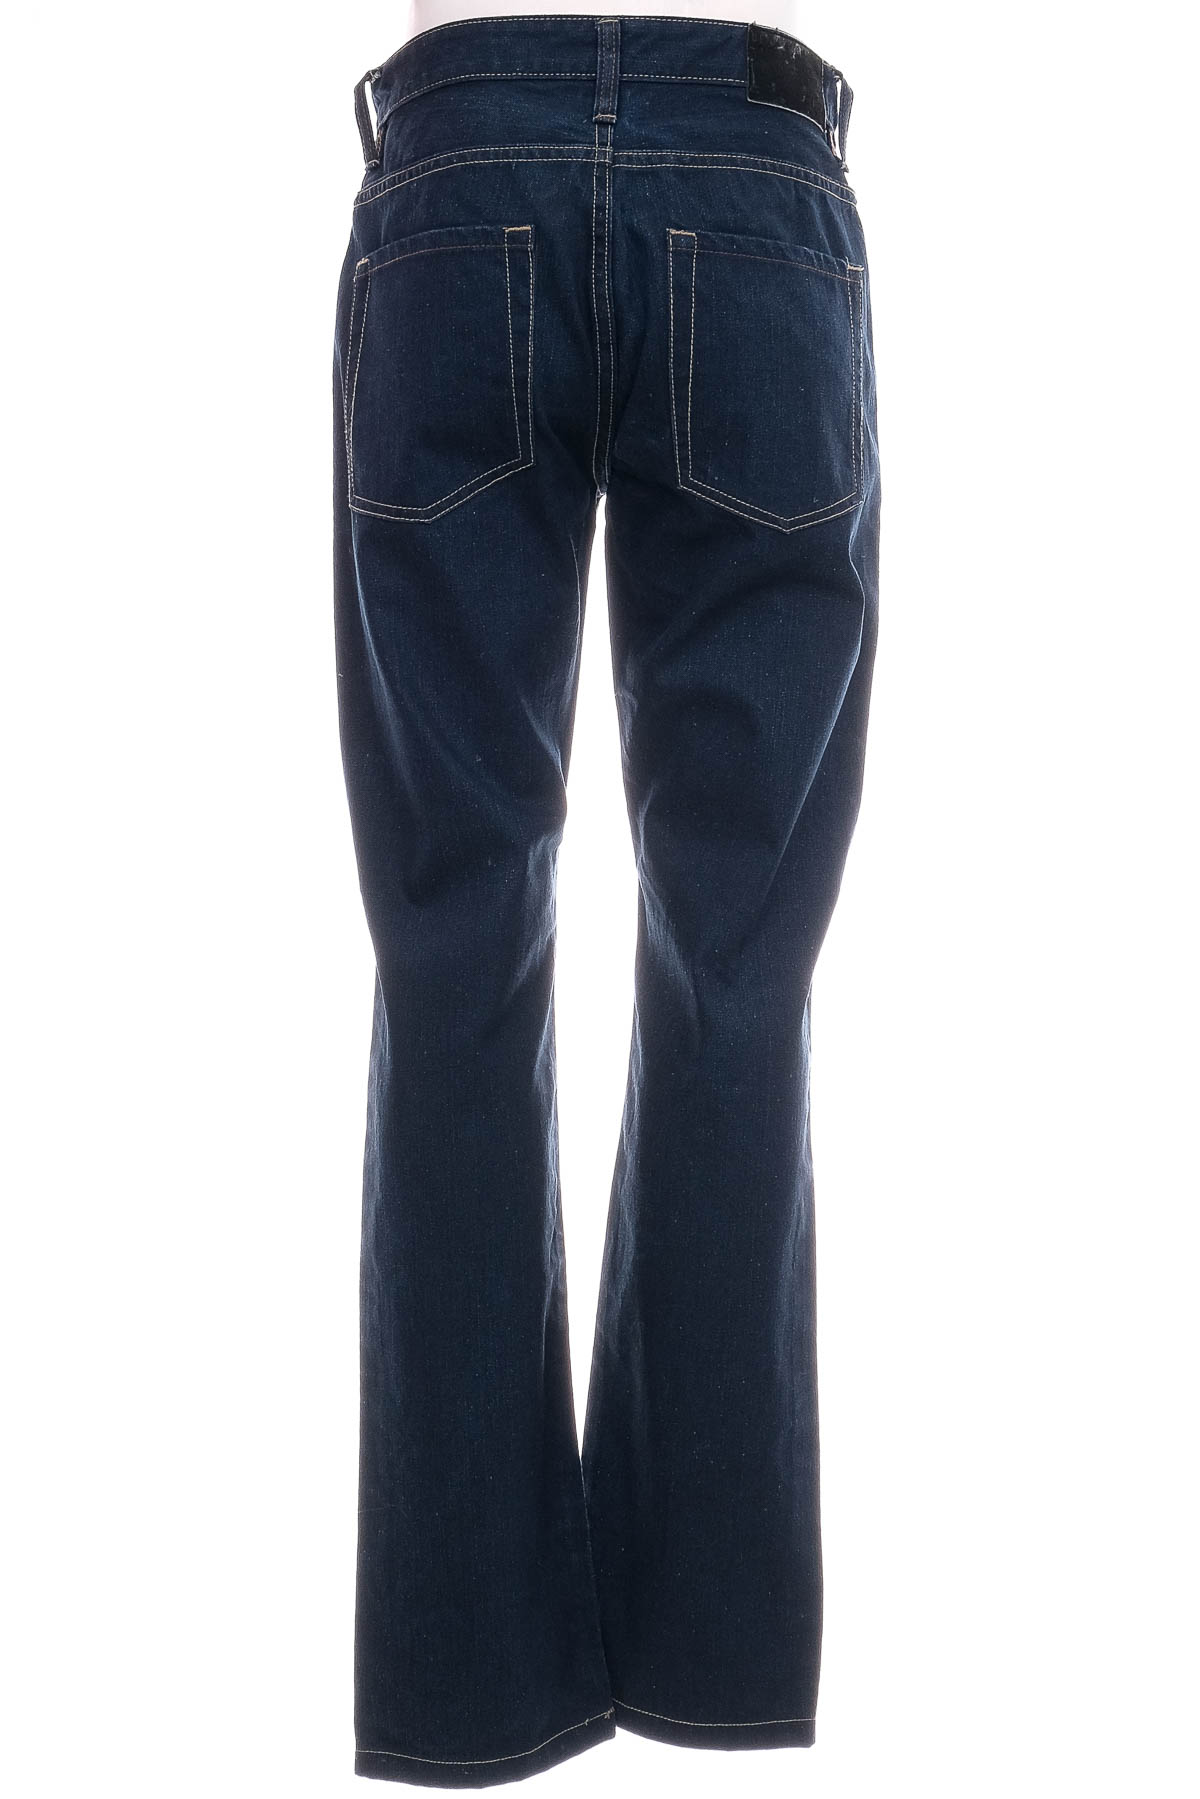 Men's jeans - Takko Fashion - 1